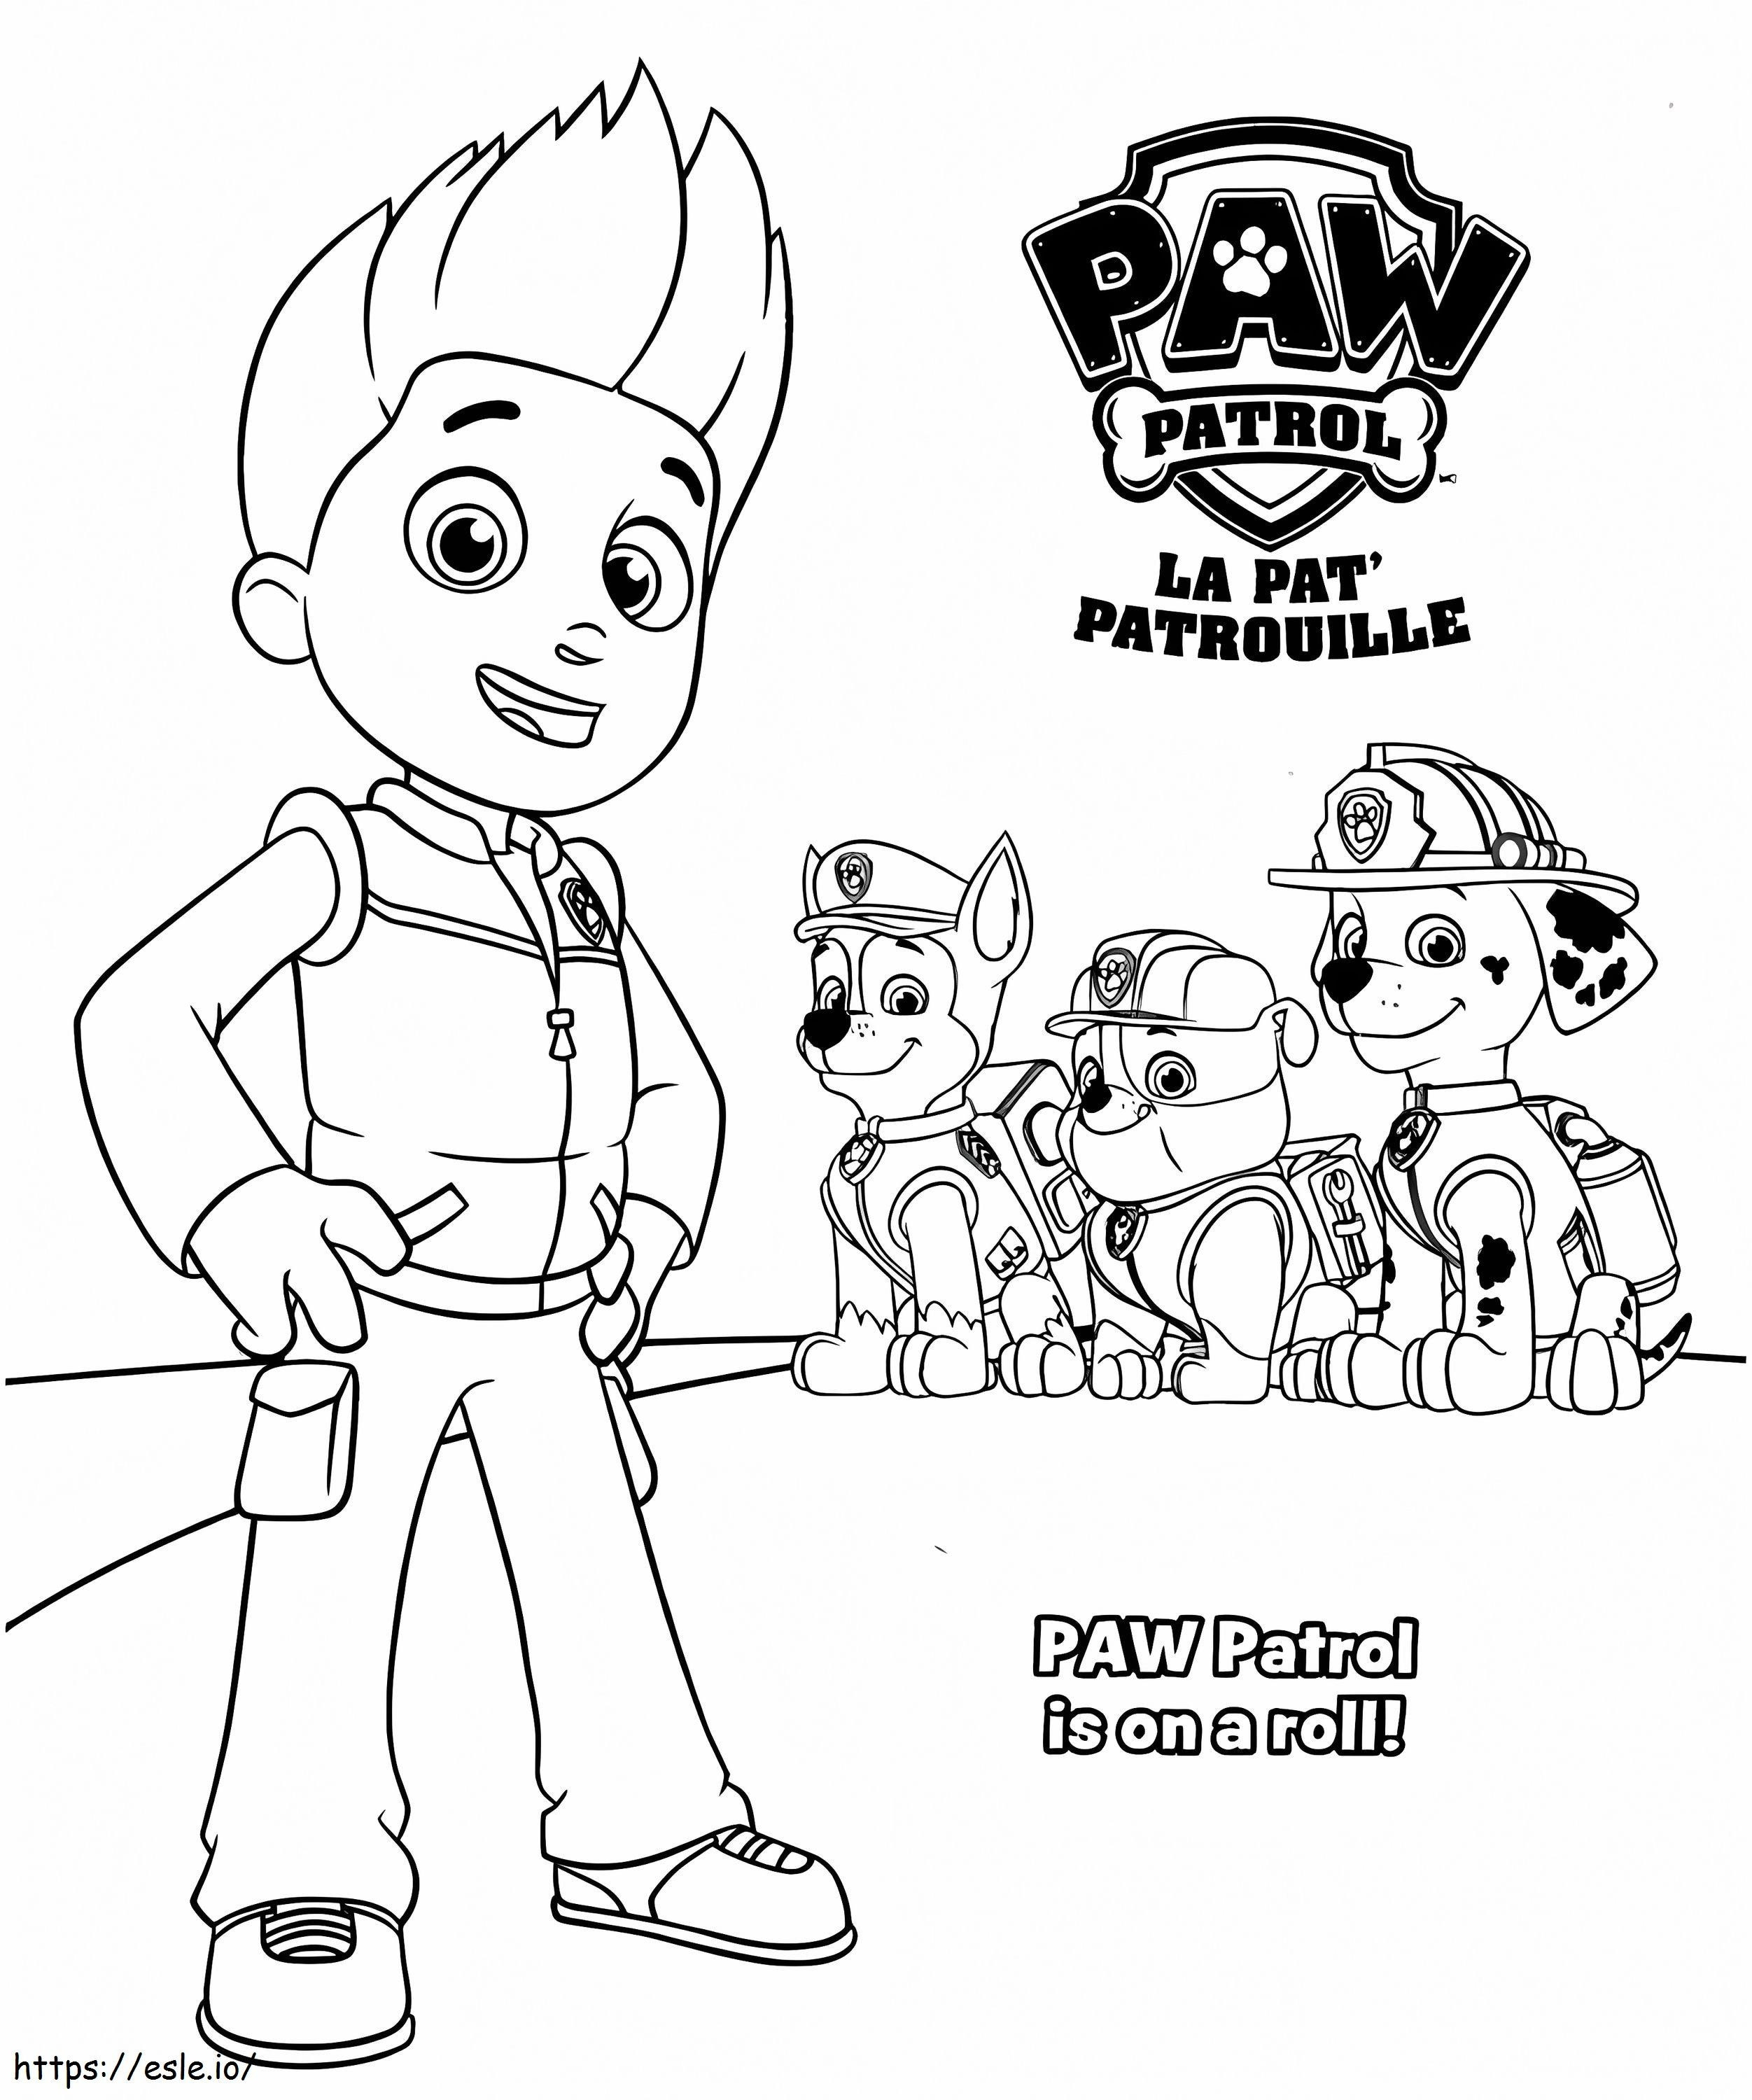 Ryder Paw Patrol 5 coloring page